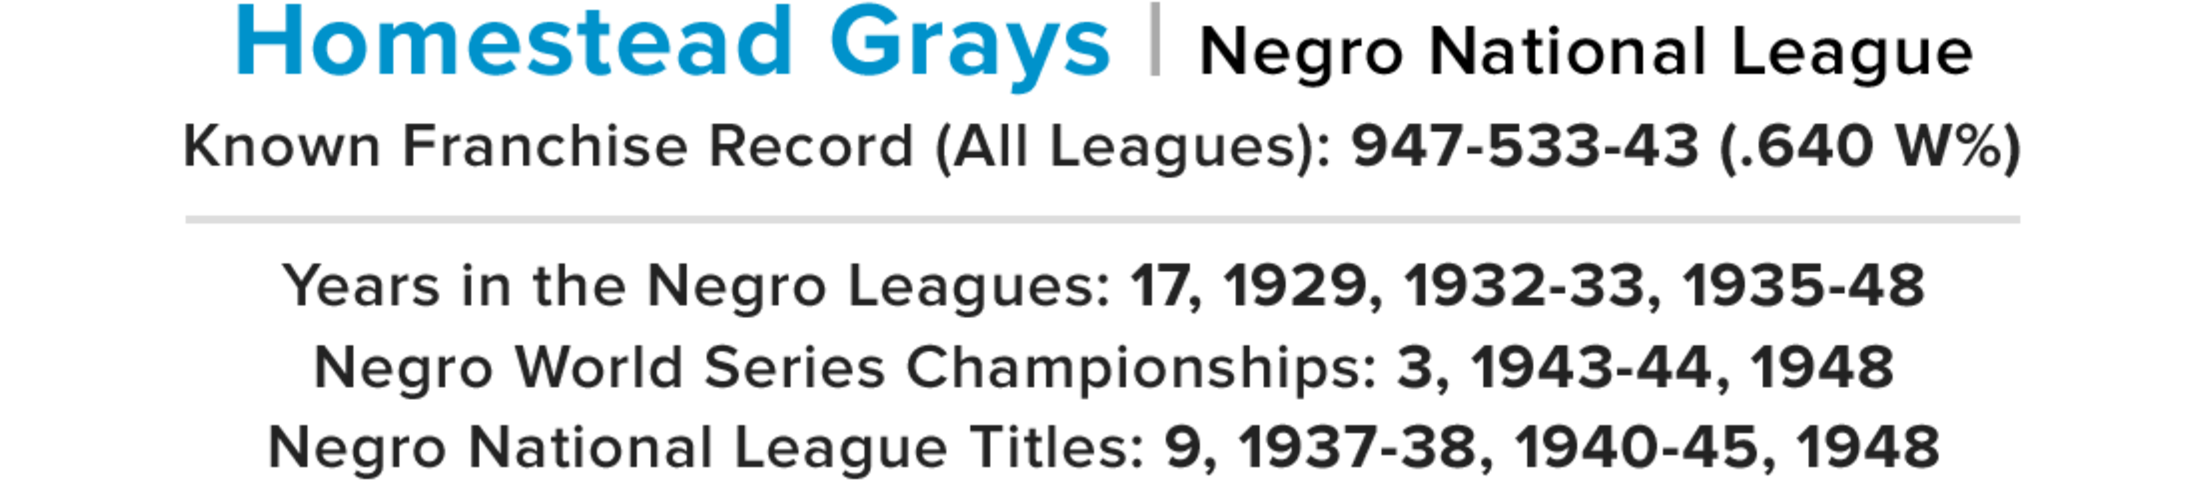 How The Negro League's Homestead Grays Shaped D.C. Baseball